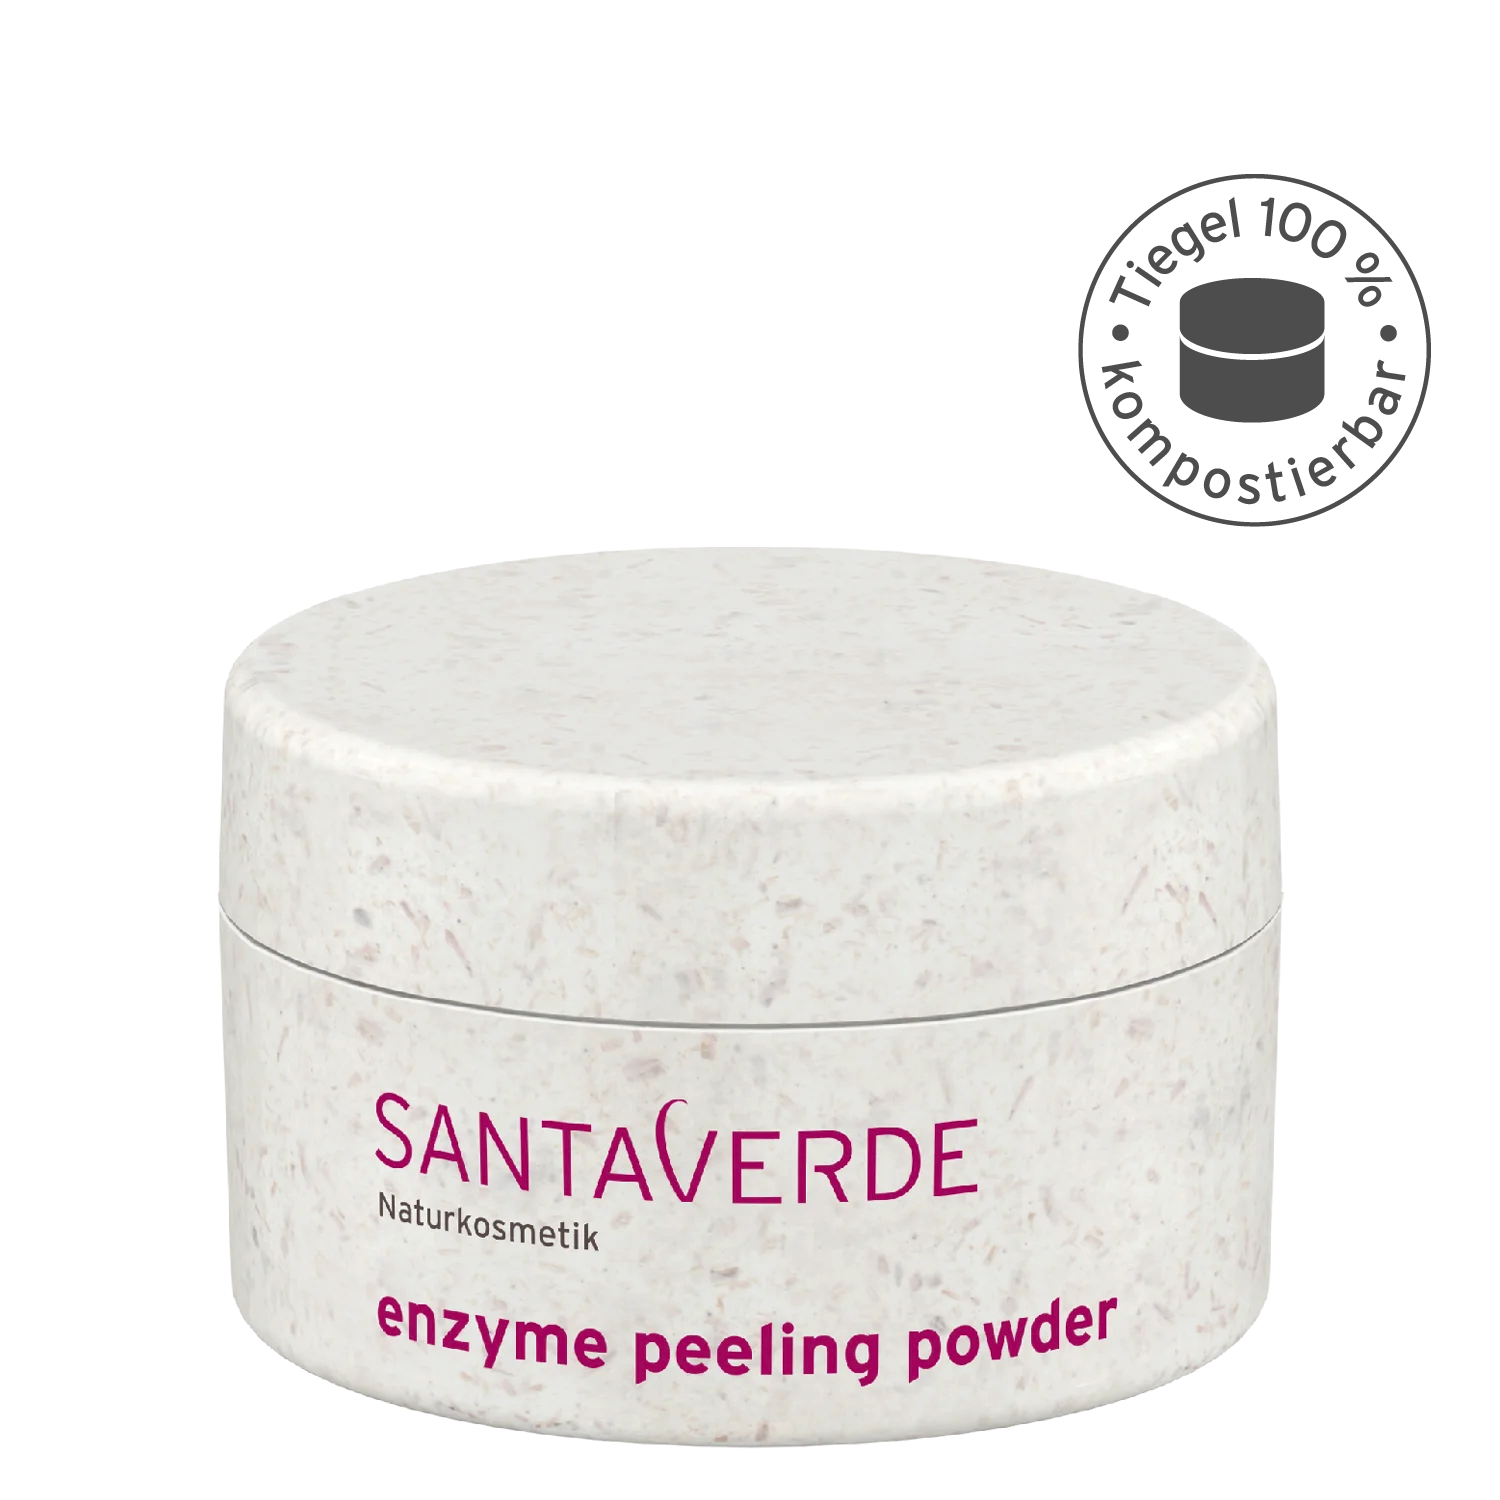 Santaverde enzyme peeling powder | 10ml